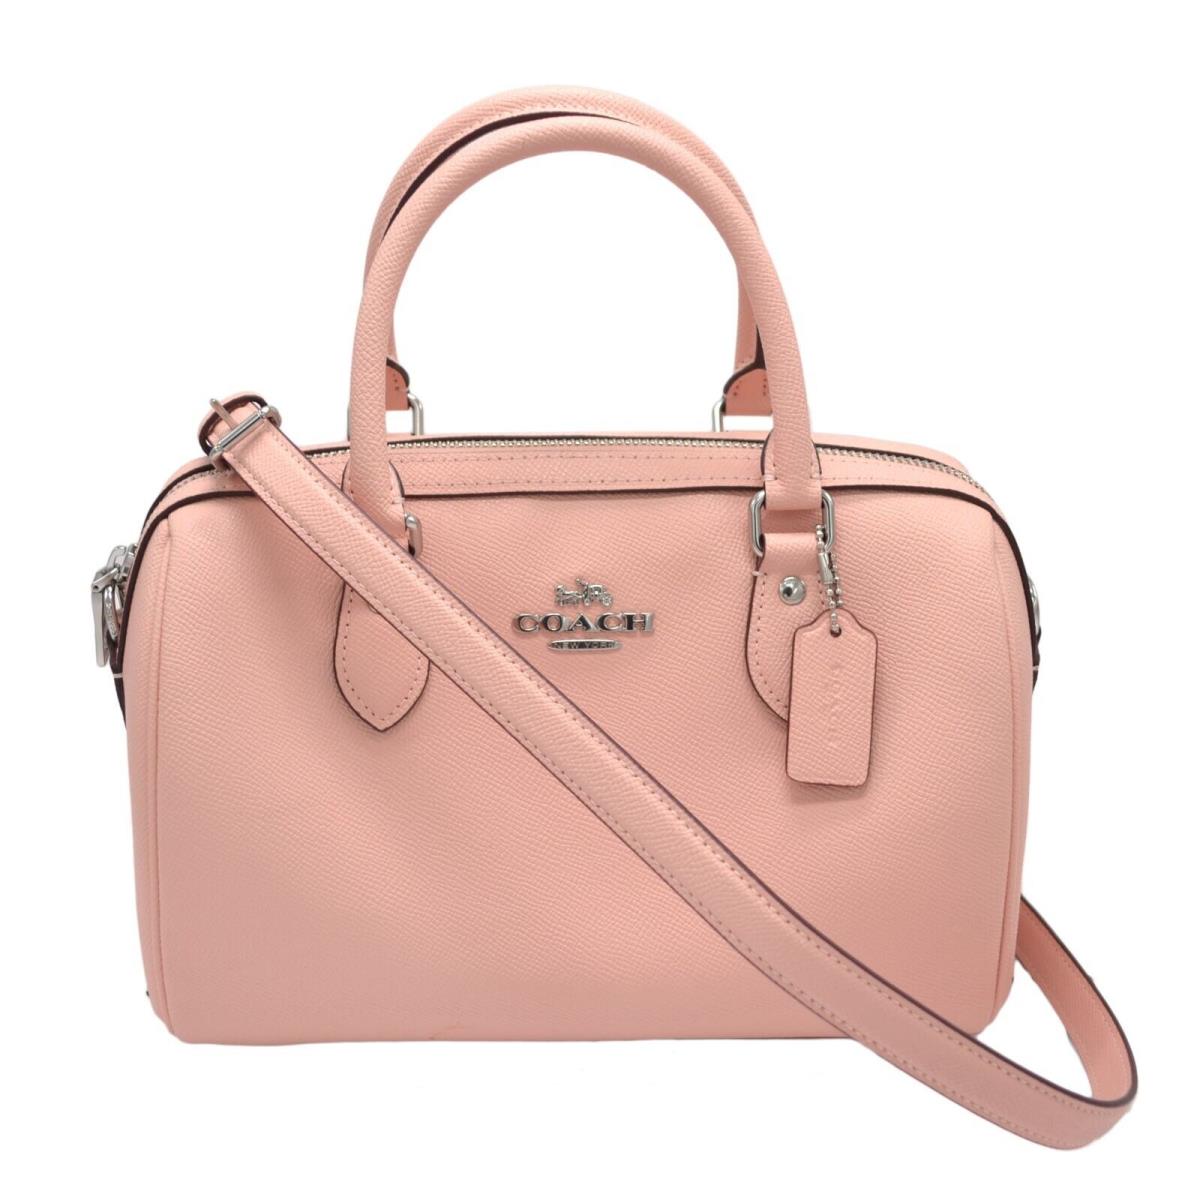 Coach Women`s Rowan Satchel Purse Crossbody Leather Handbag Light Pink